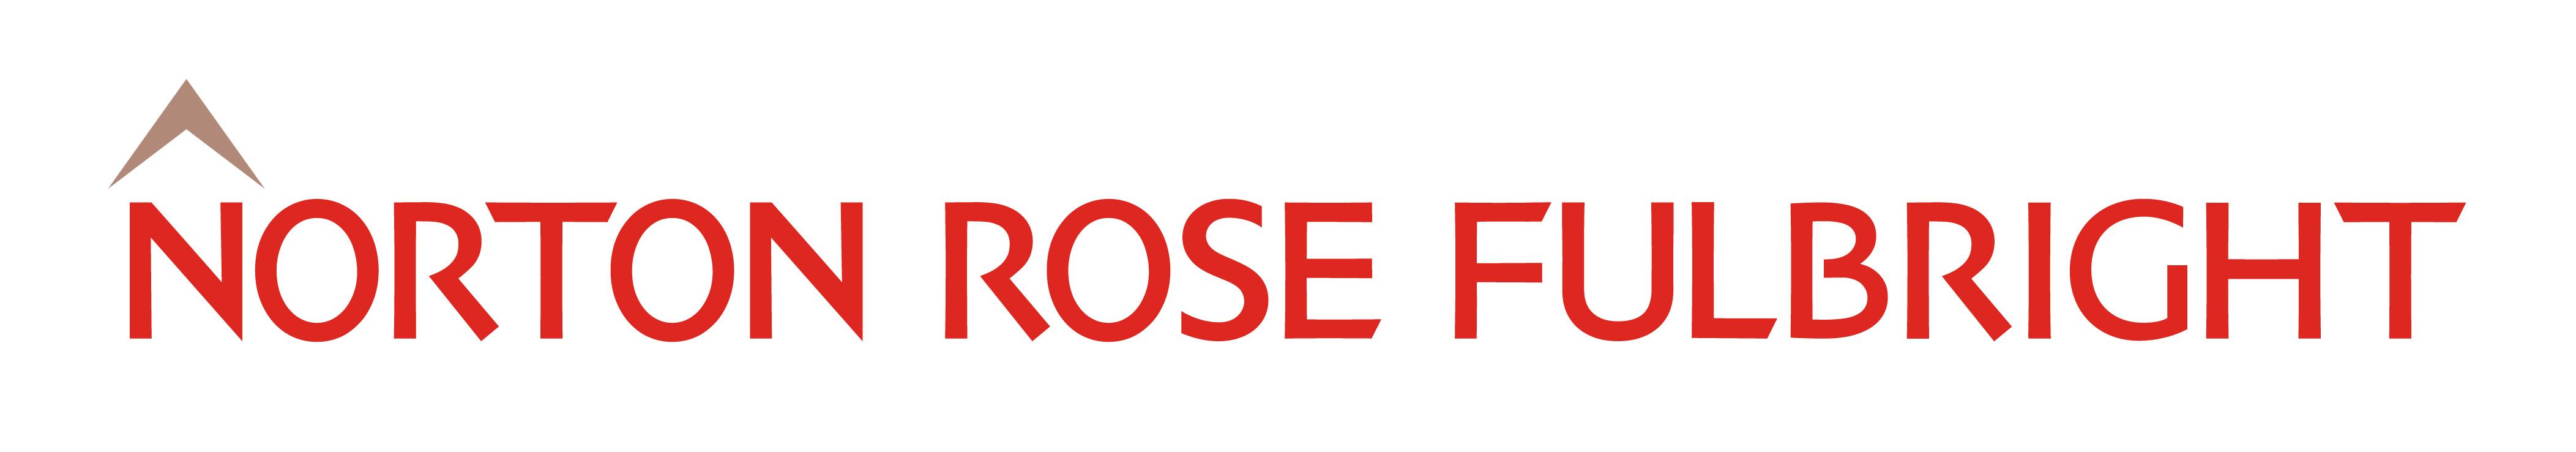 Norton Rose Fulbright LLP logo